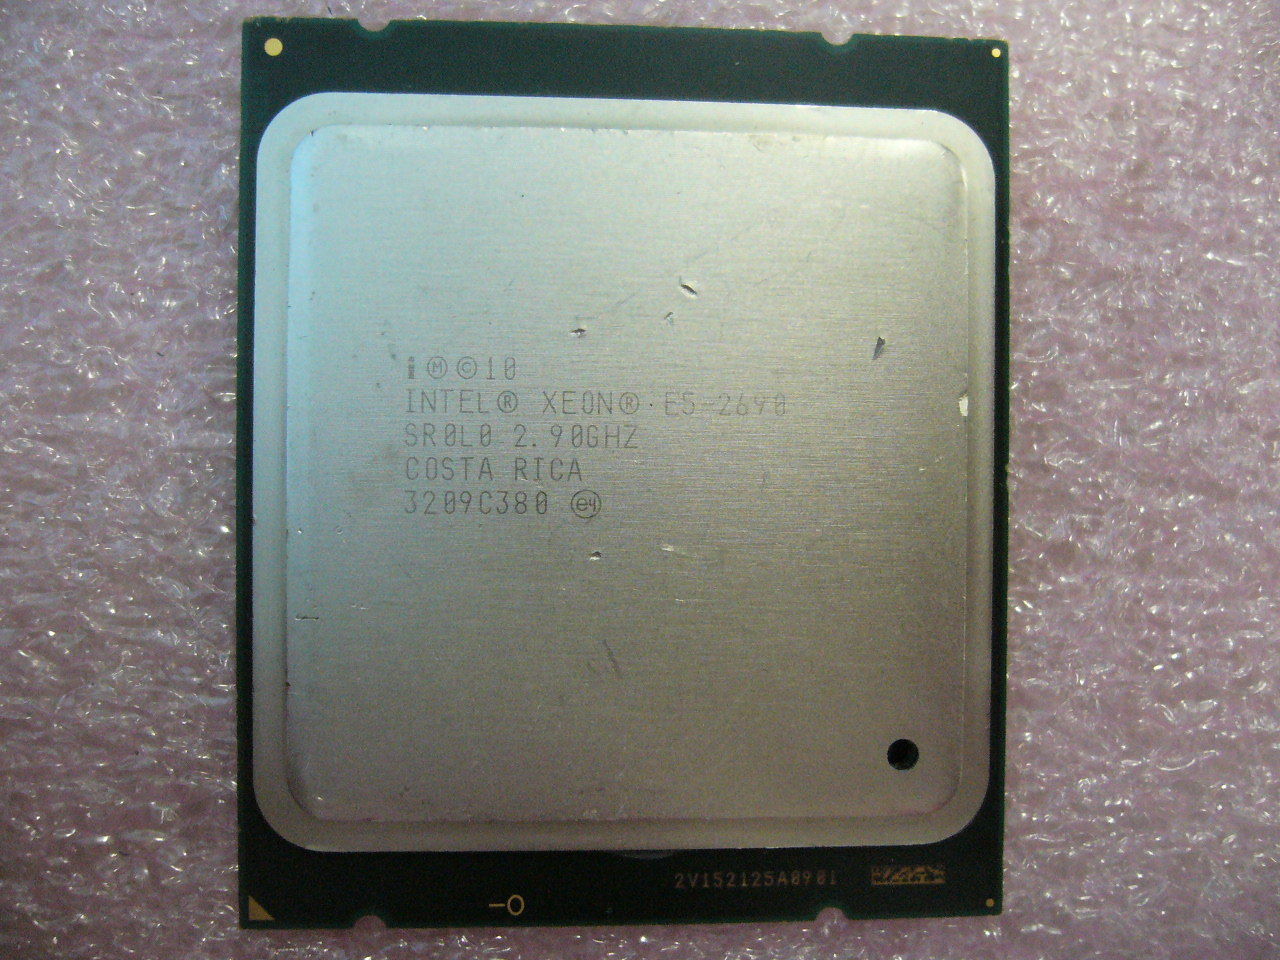 QTY 1x Intel CPU E5-2690 CPU Eight-Cores 2.9Ghz LGA2011 SR0L0 - Click Image to Close